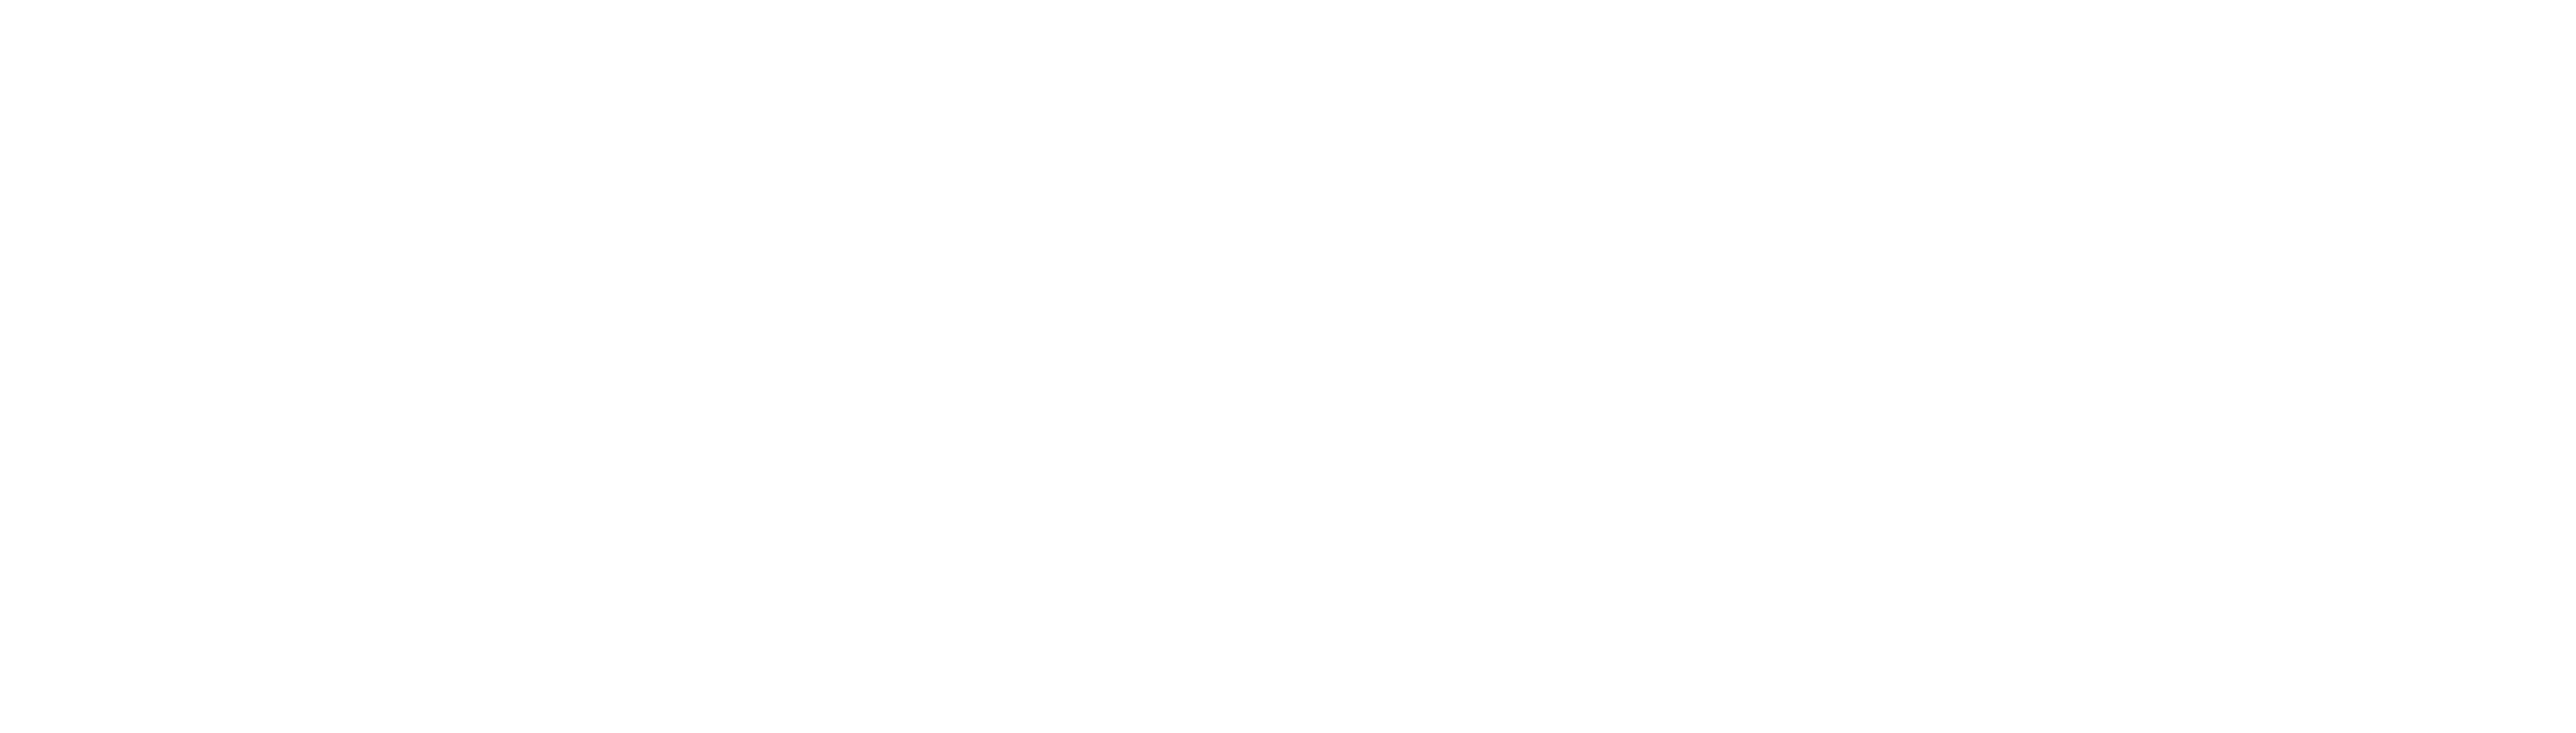 Folderly_Logo.png